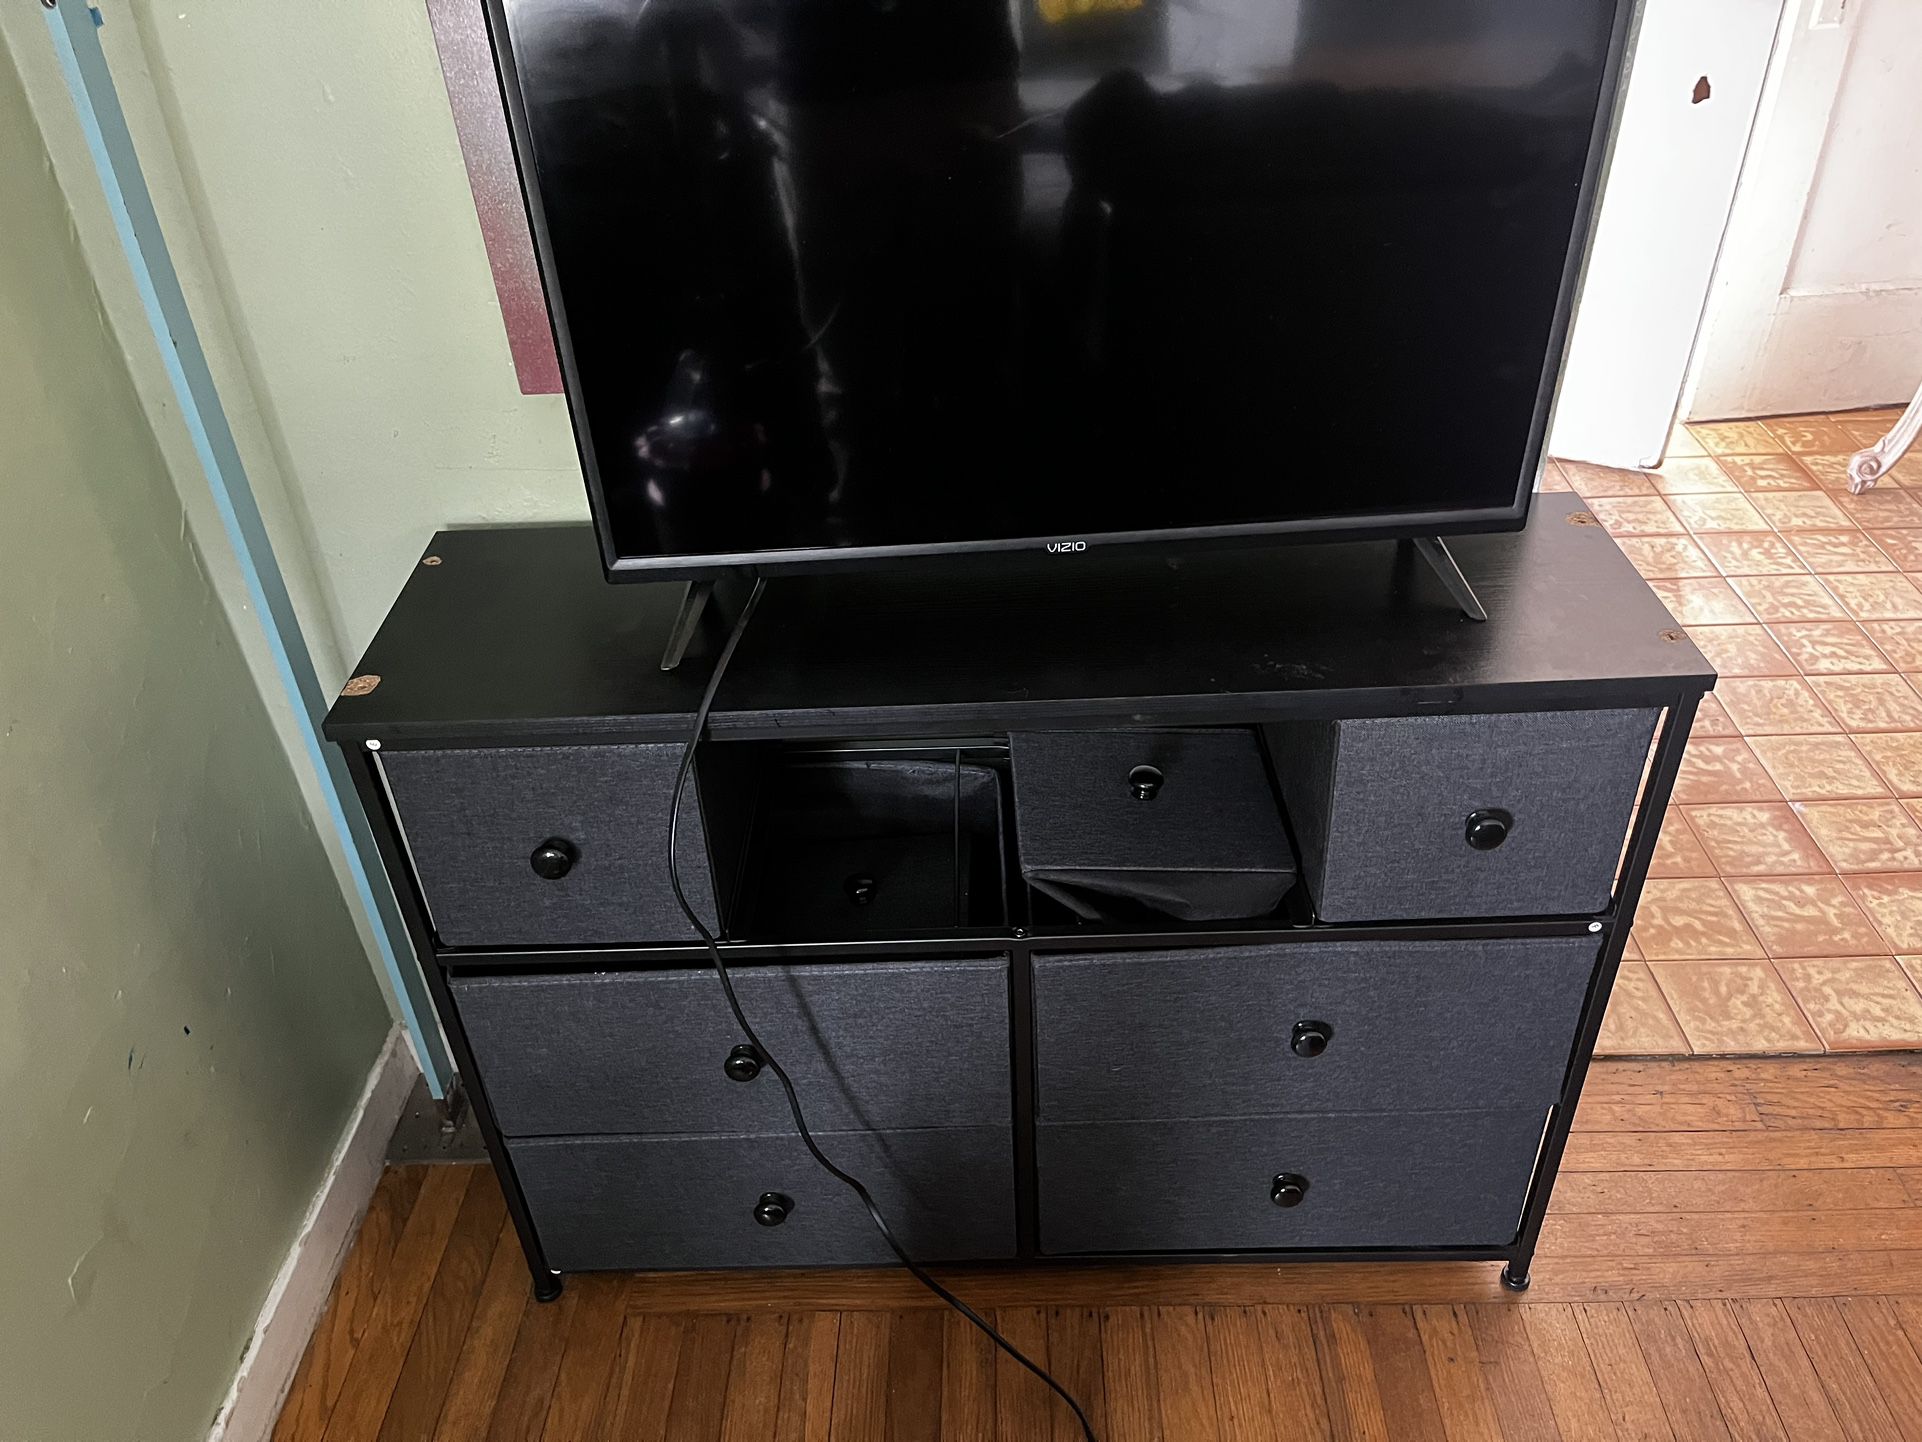 Vizio 32 Inch Tv And Tv Stand/ Cabinet Set(NO CONTROLLER)